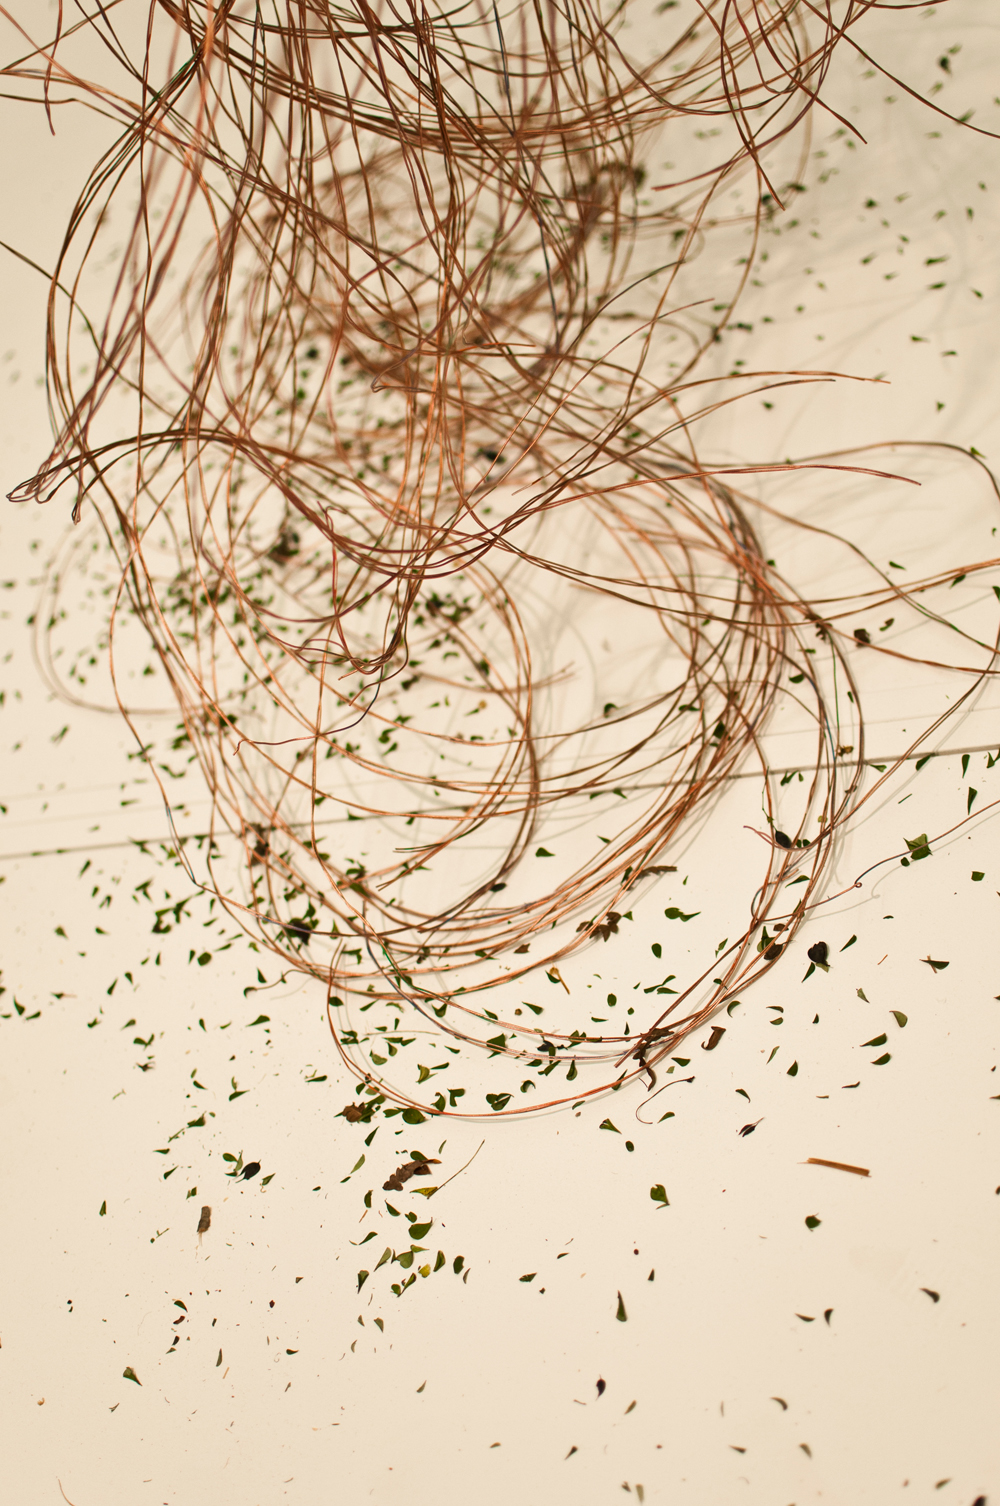 plants bio biology merging funnels science art sculpture mutation Téchne Wires electricity hybrid